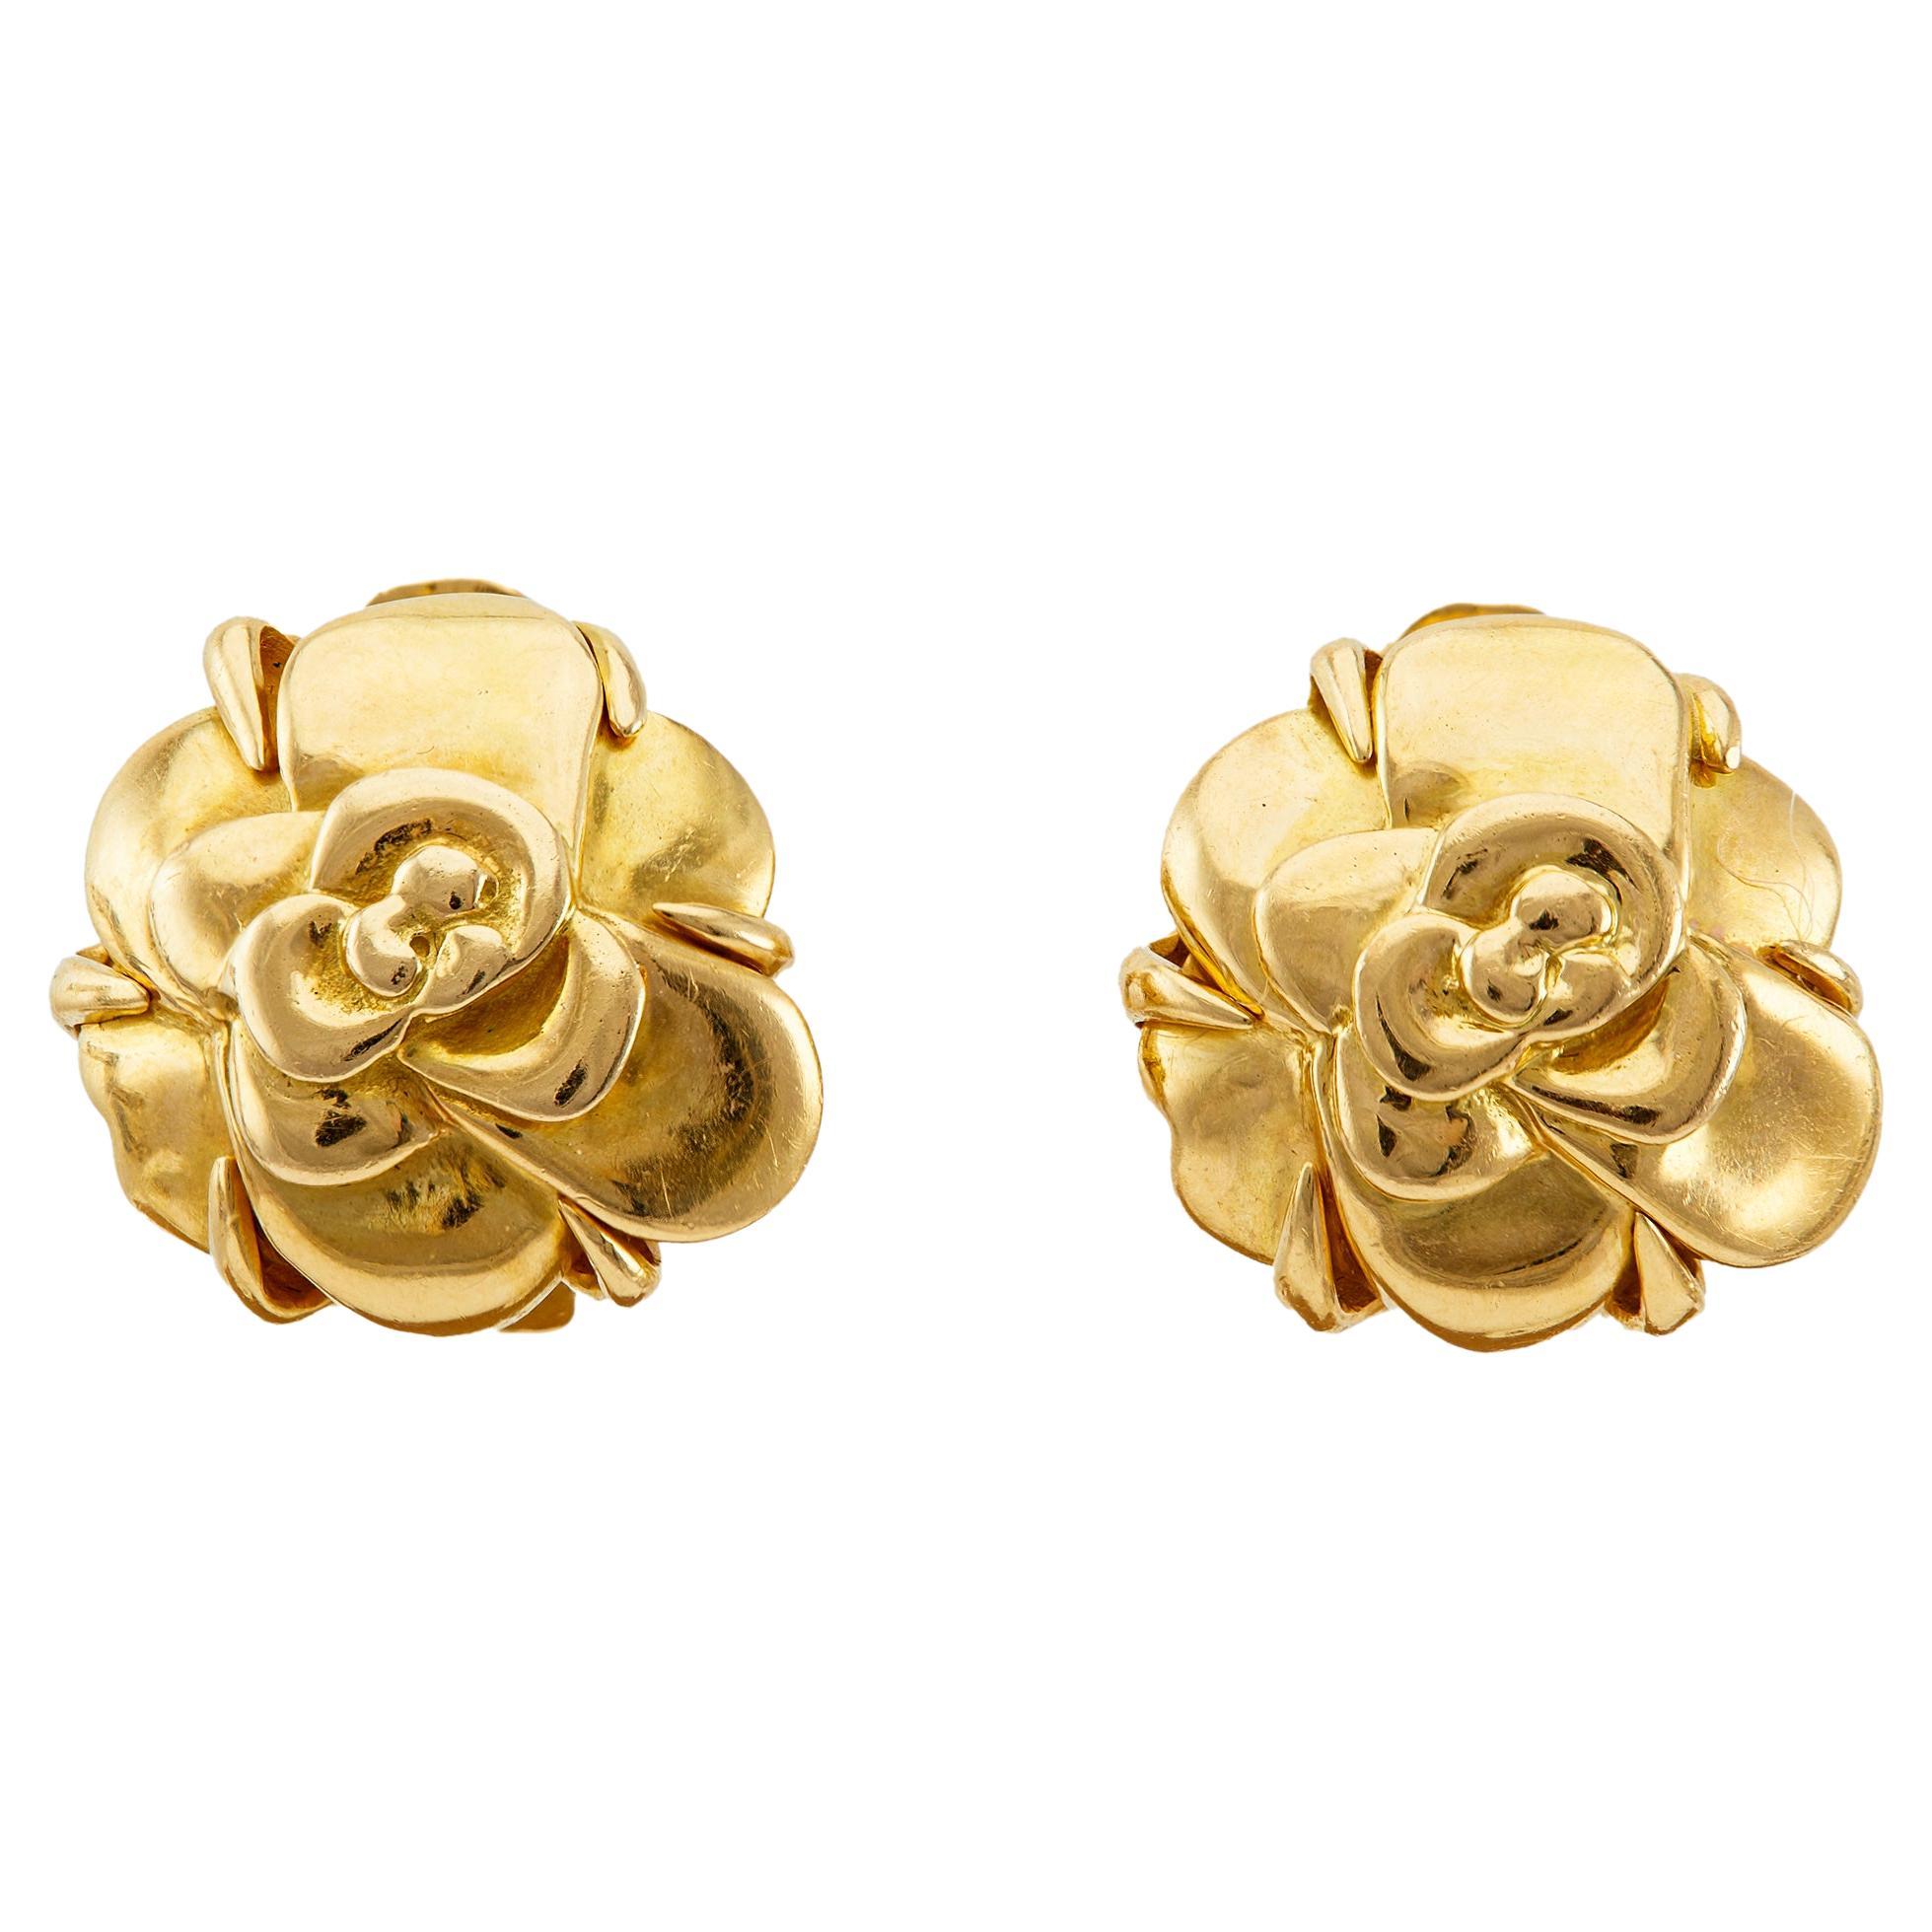 Pair of Chanel 18K Yellow Gold Camellia Flower Earrings